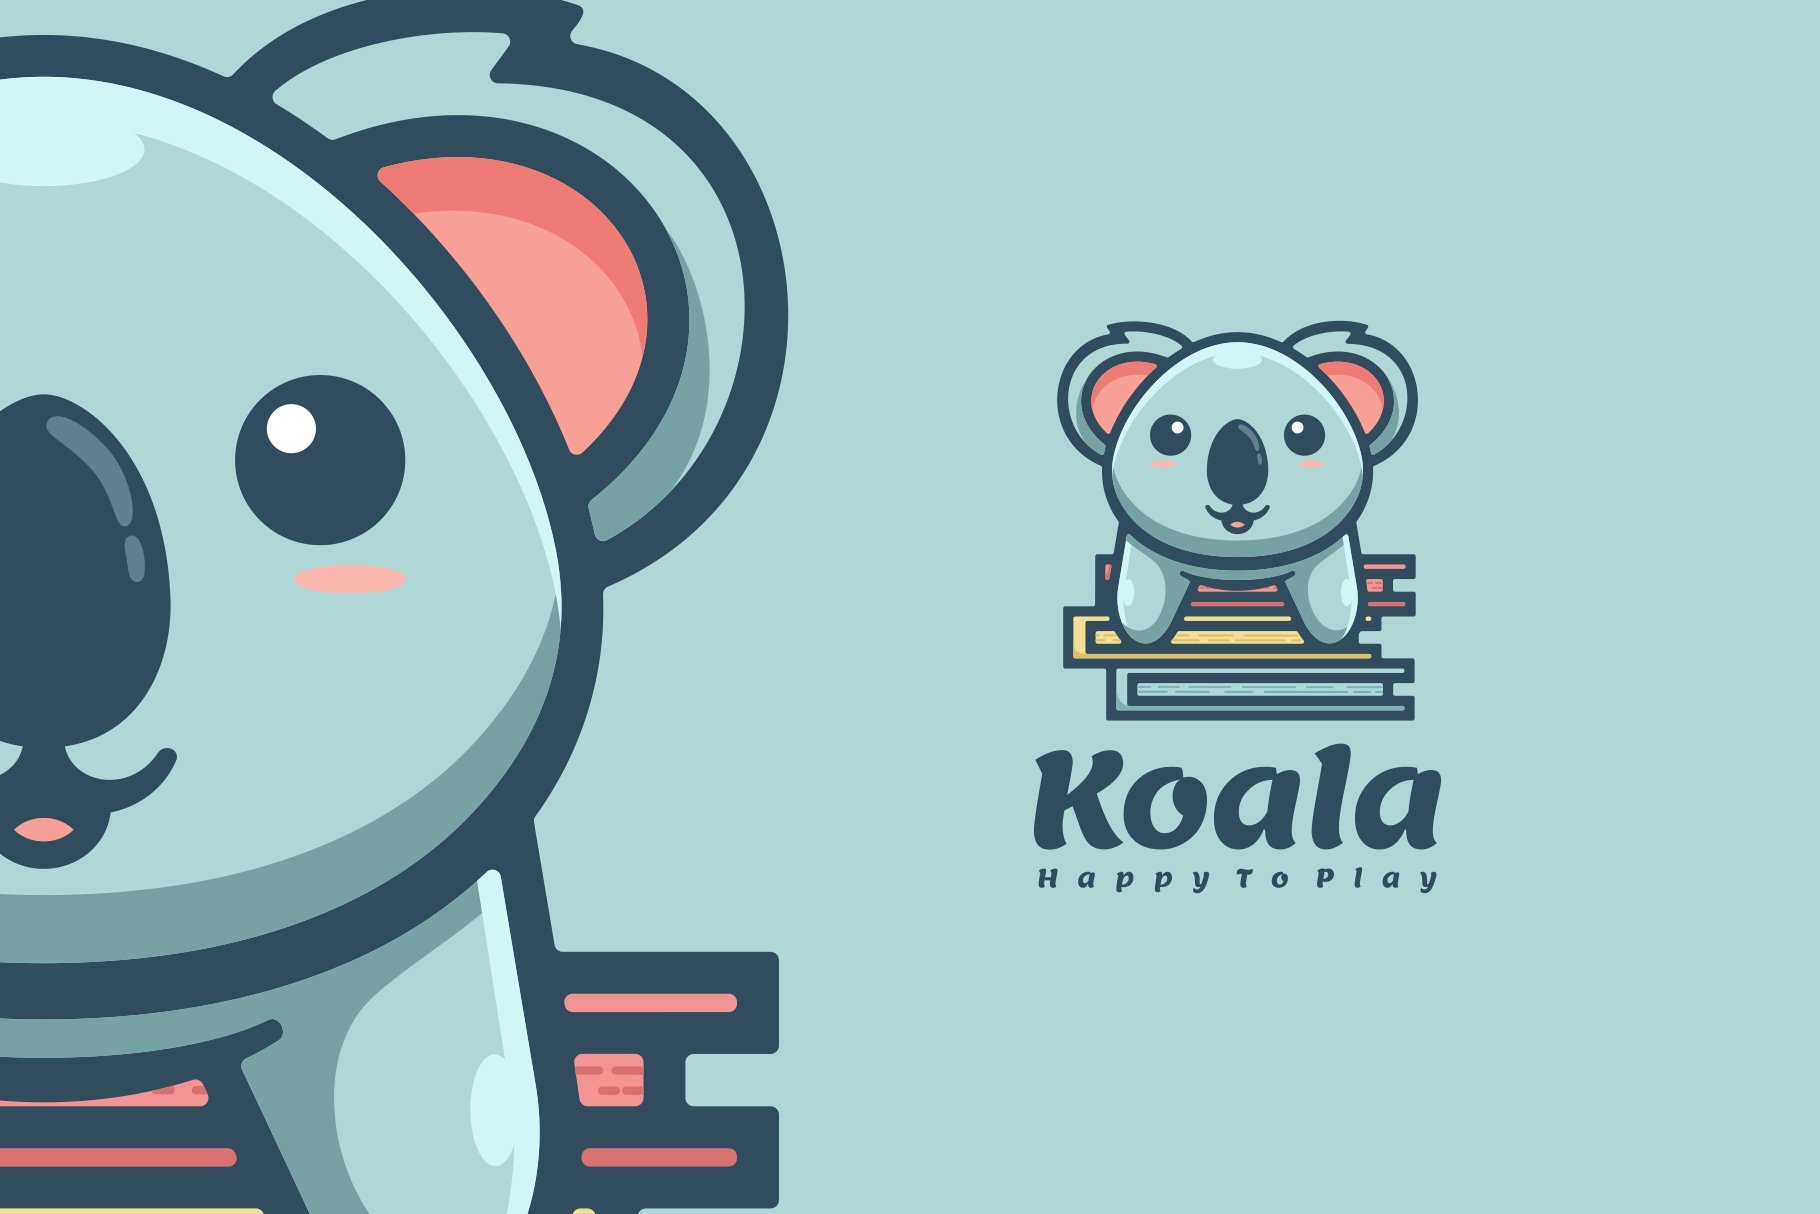 Koala Cartoon Logo cover image.